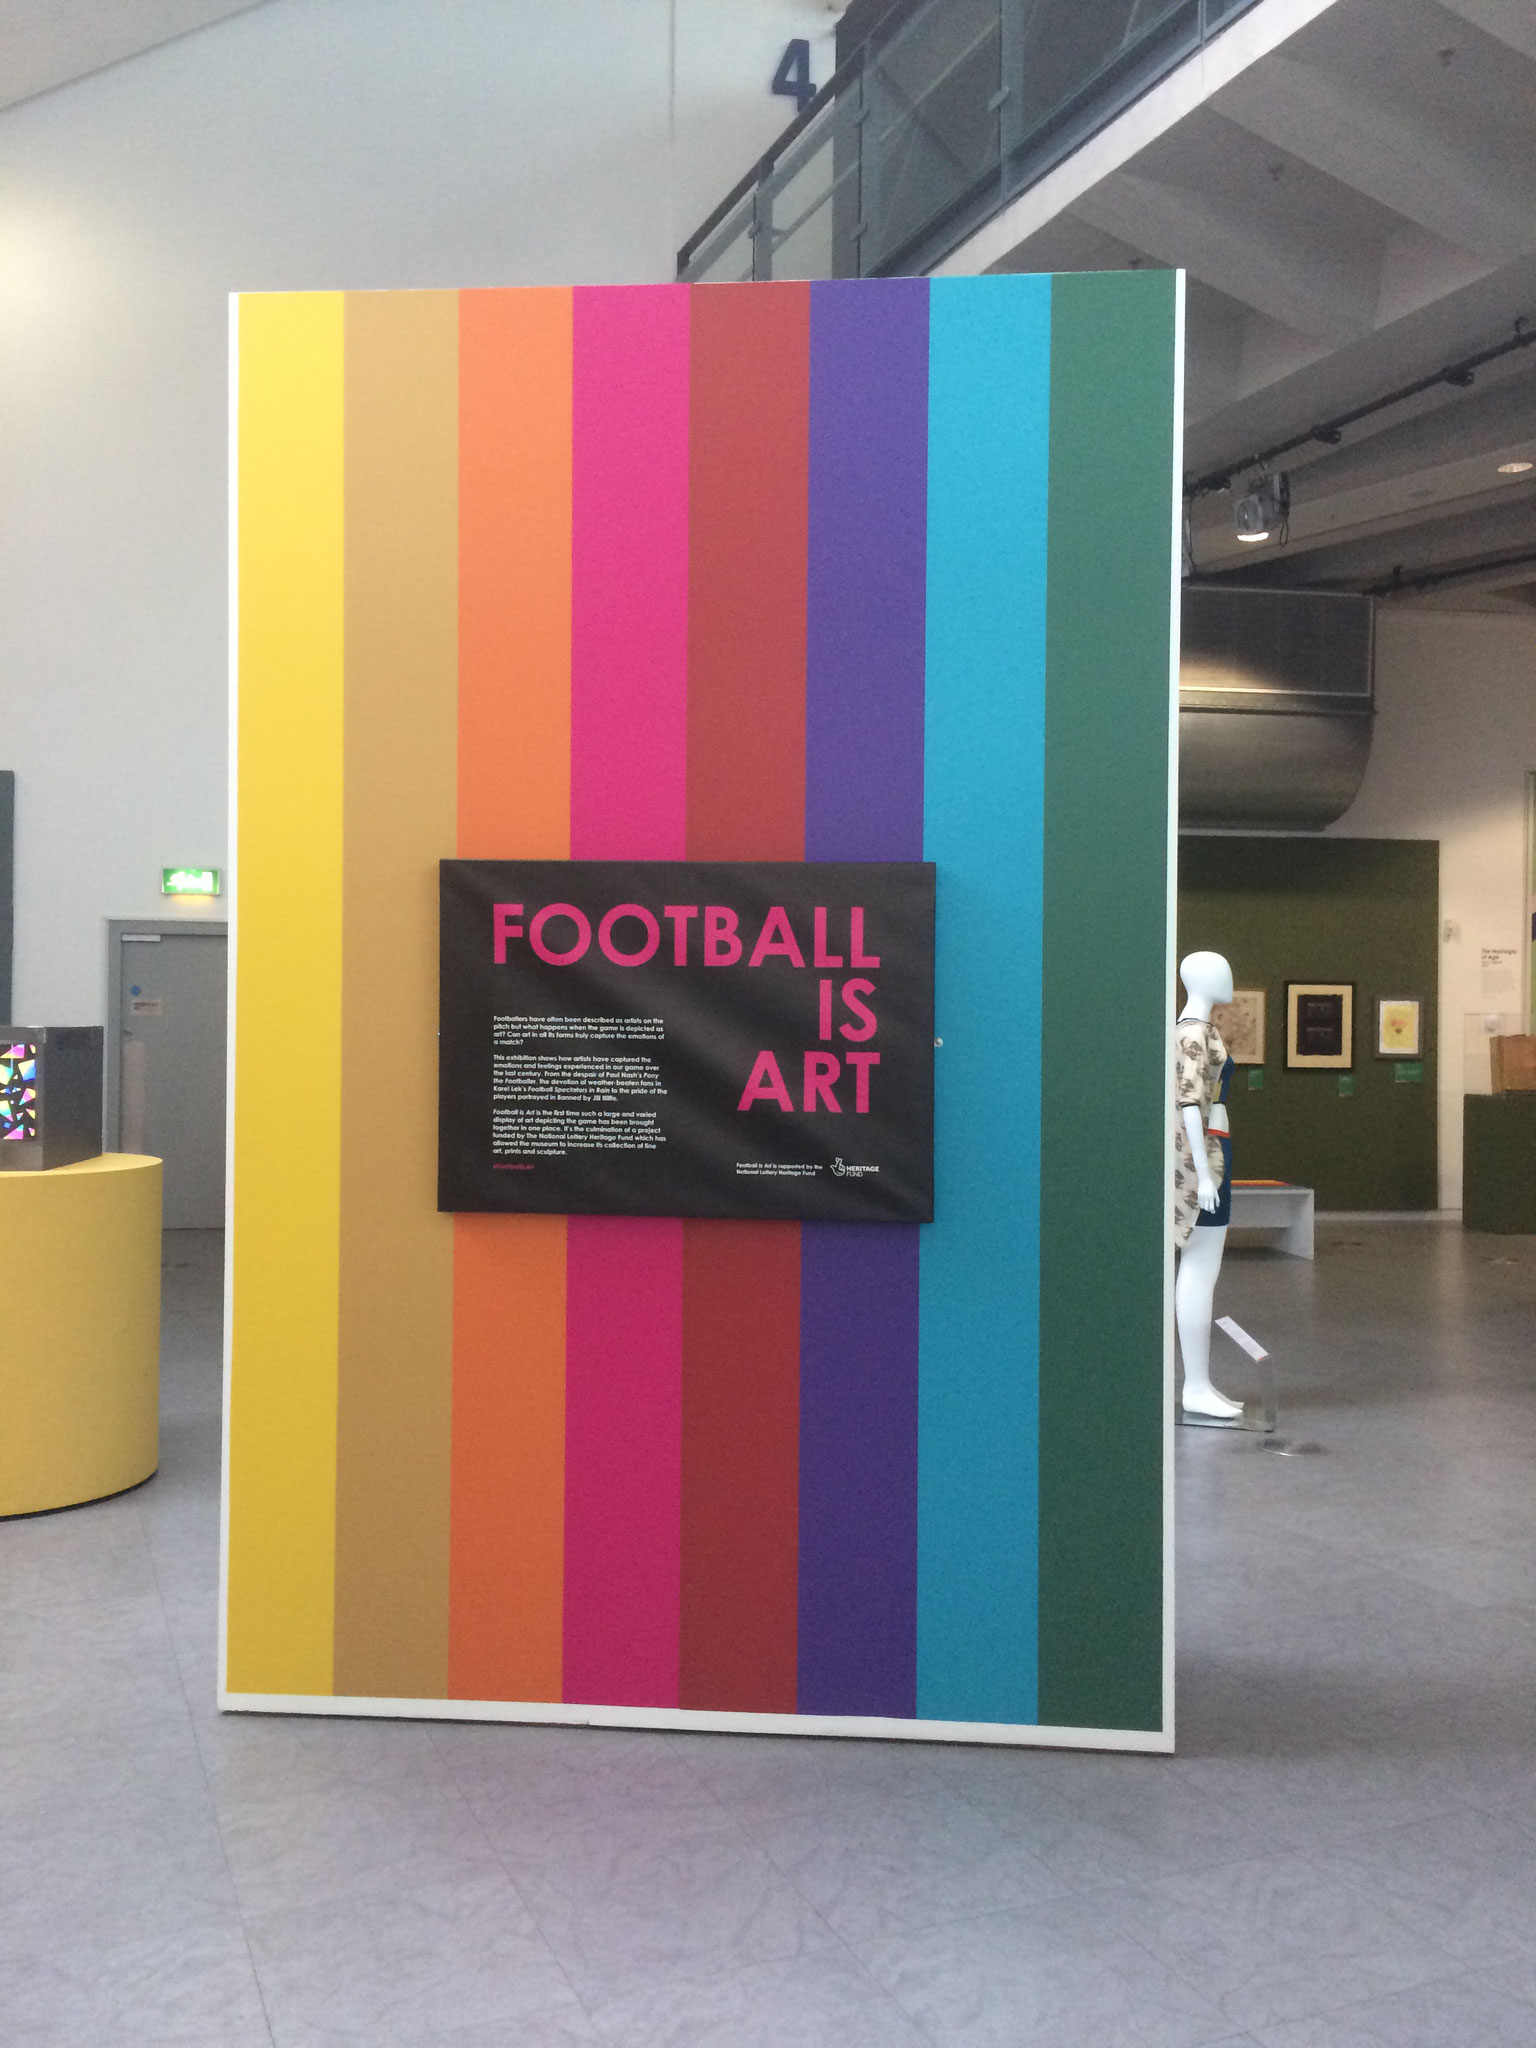 Football is Art - Sonderausstellung im Fußballmuseum in Manchester